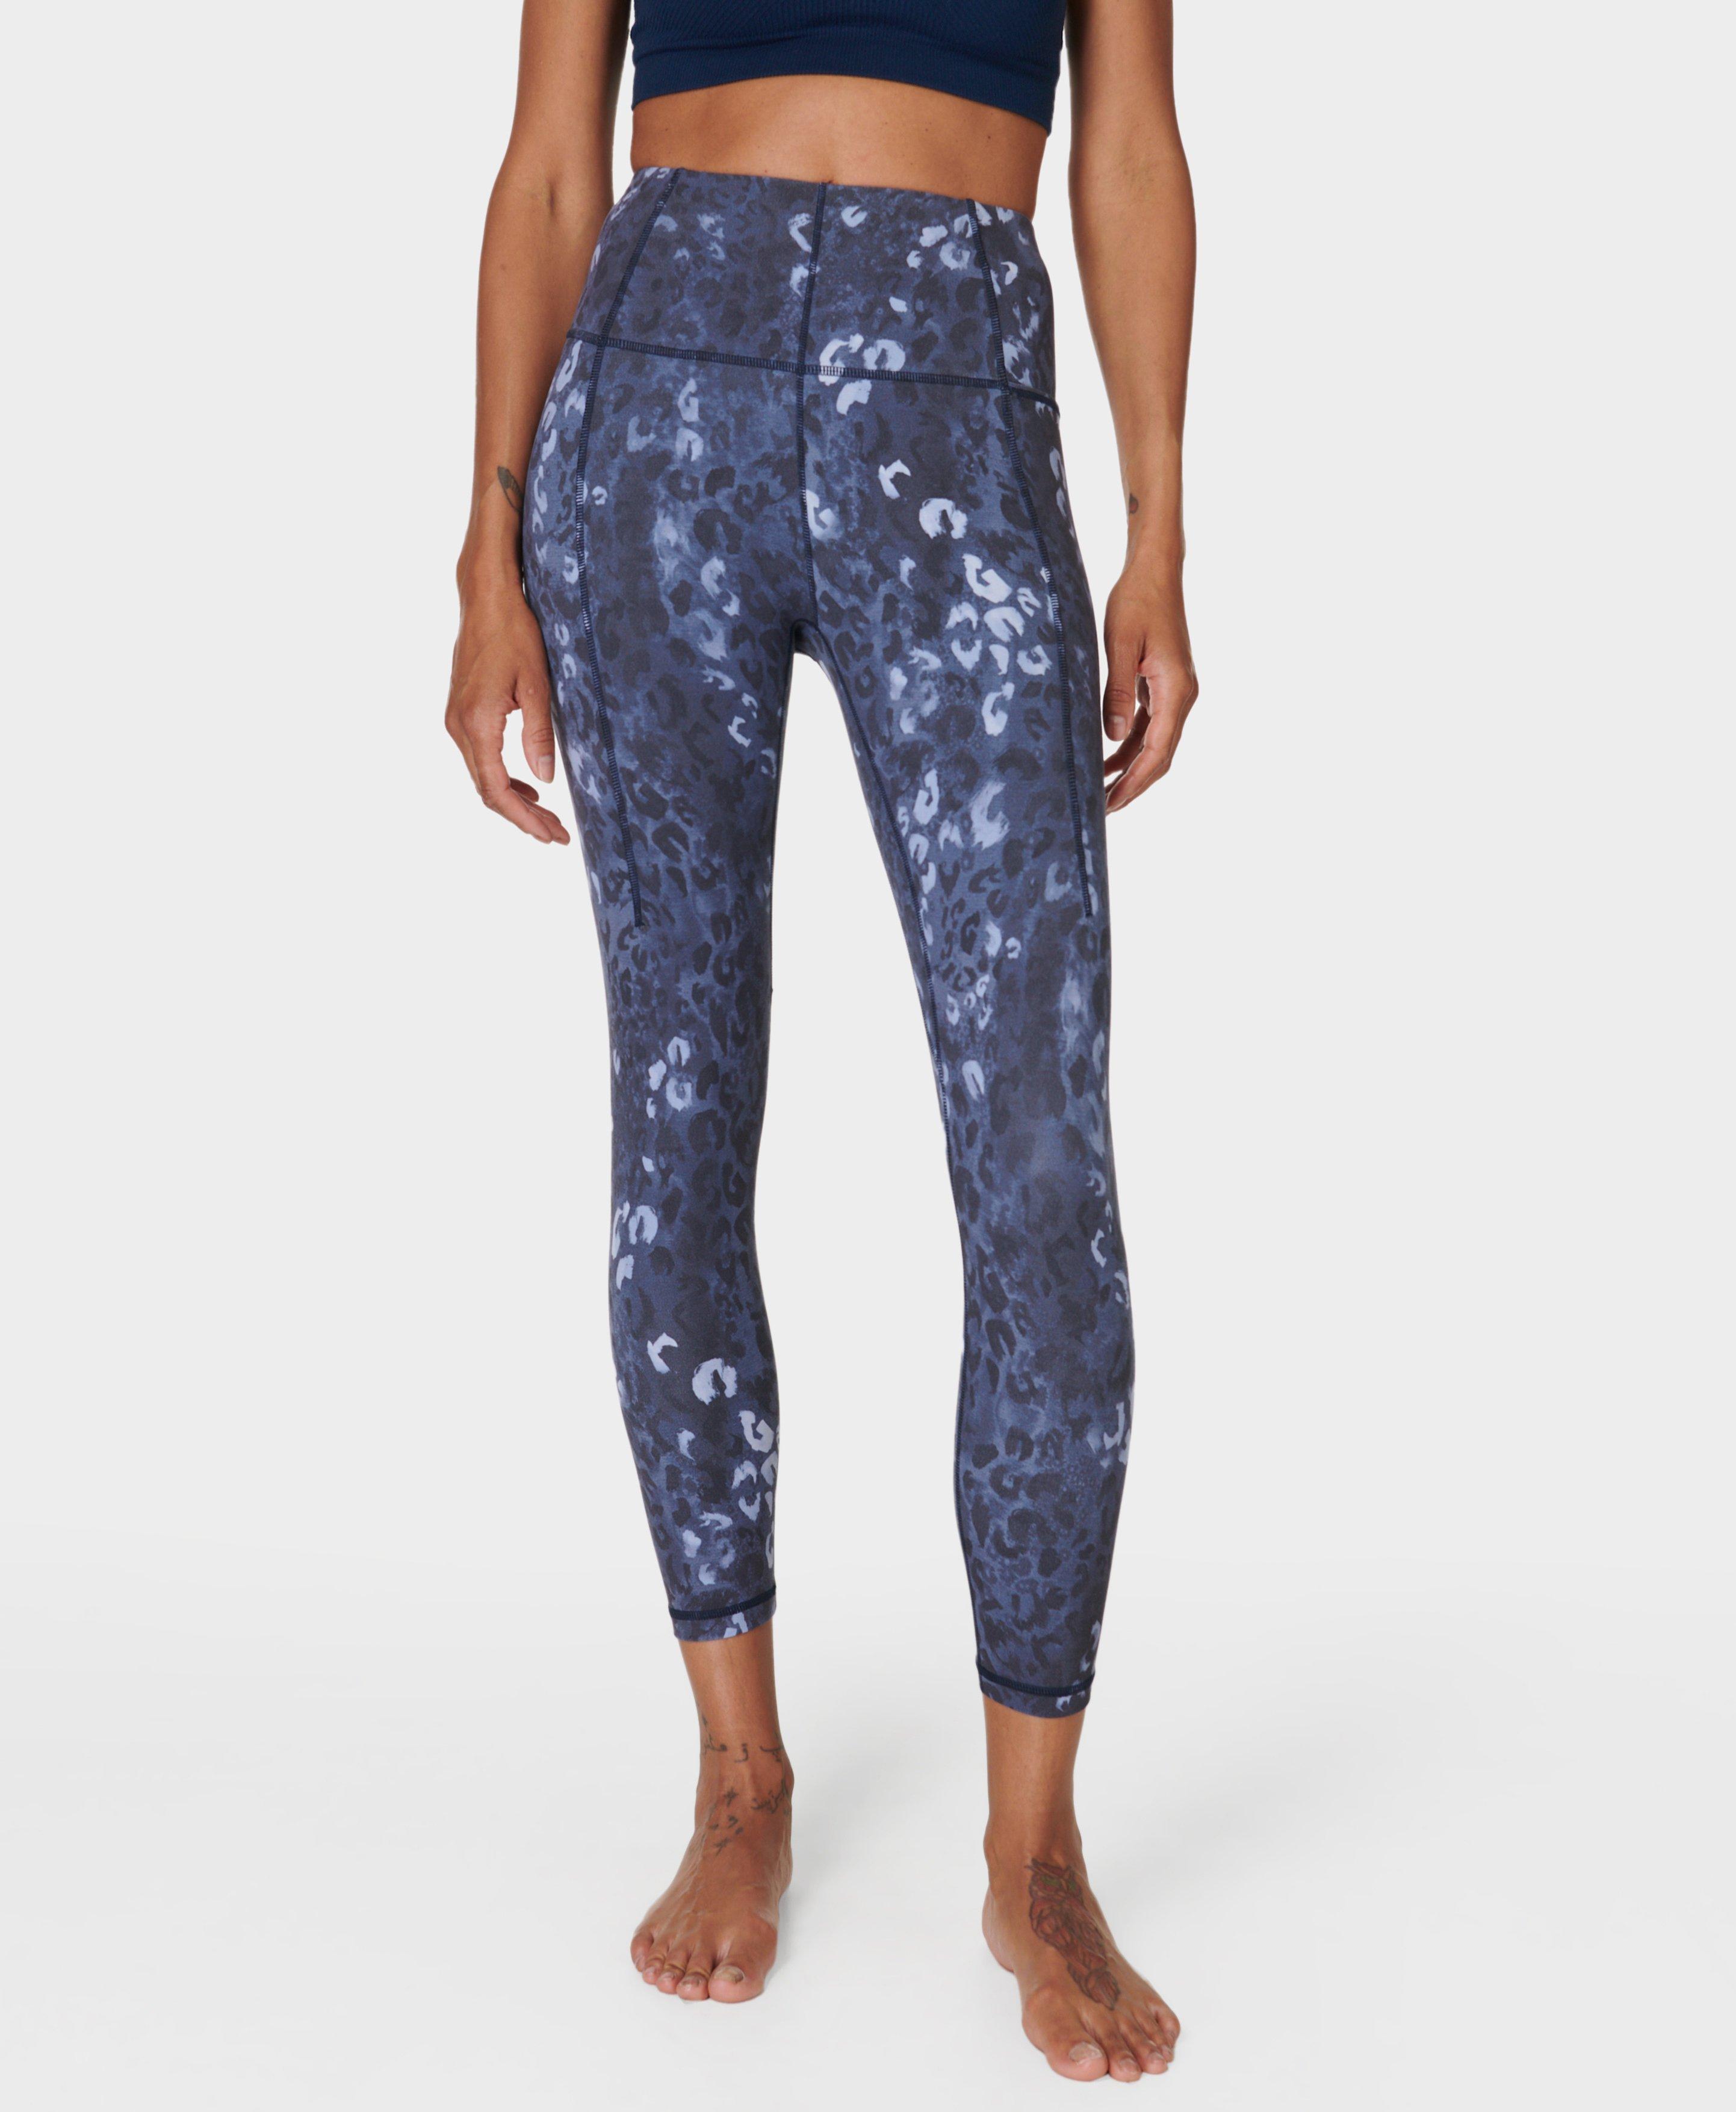 Pgeraug pants for women High Waist Solid Color Tight Fitness Hidden Yoga  Pants yoga pants Navy L 